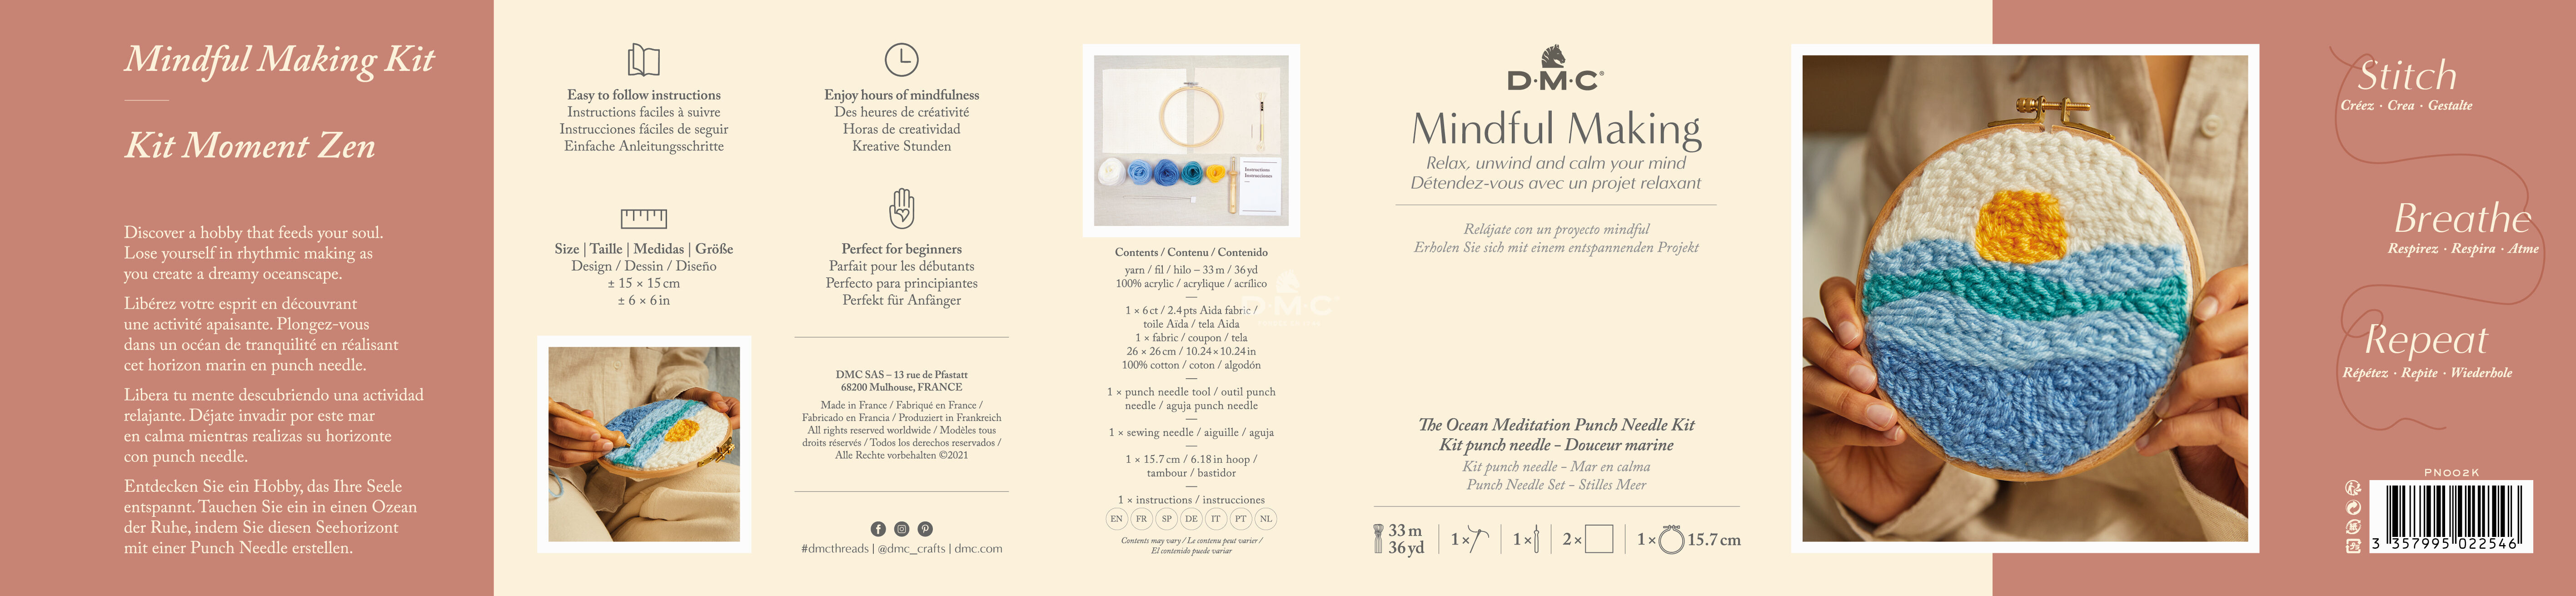 DMC Mindful Making The Ocean Meditation Punch Needle Kit